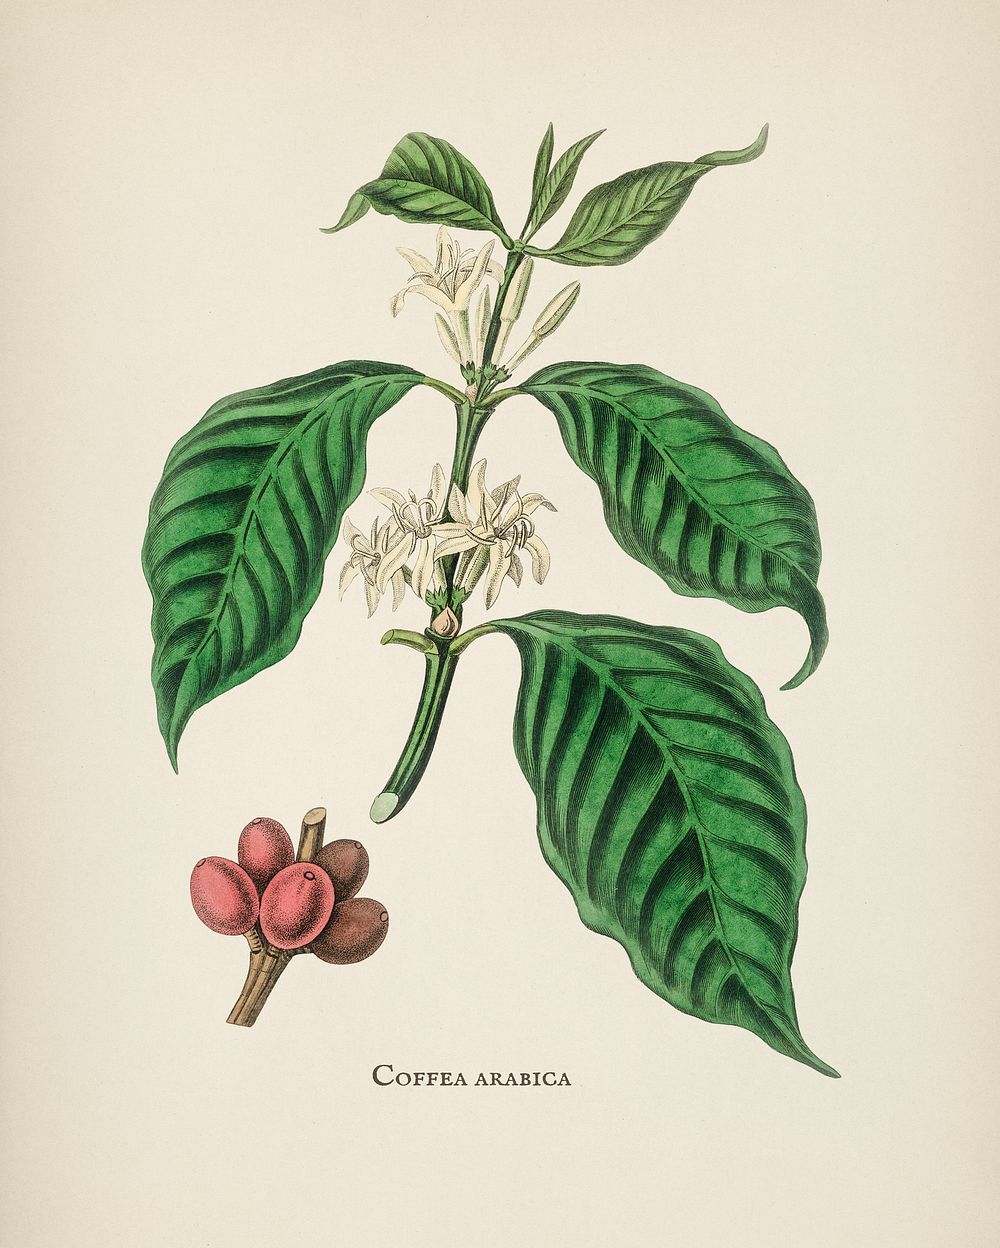 Coffea arabica illustration from Medical Botany (1836) by John Stephenson and James Morss Churchill.